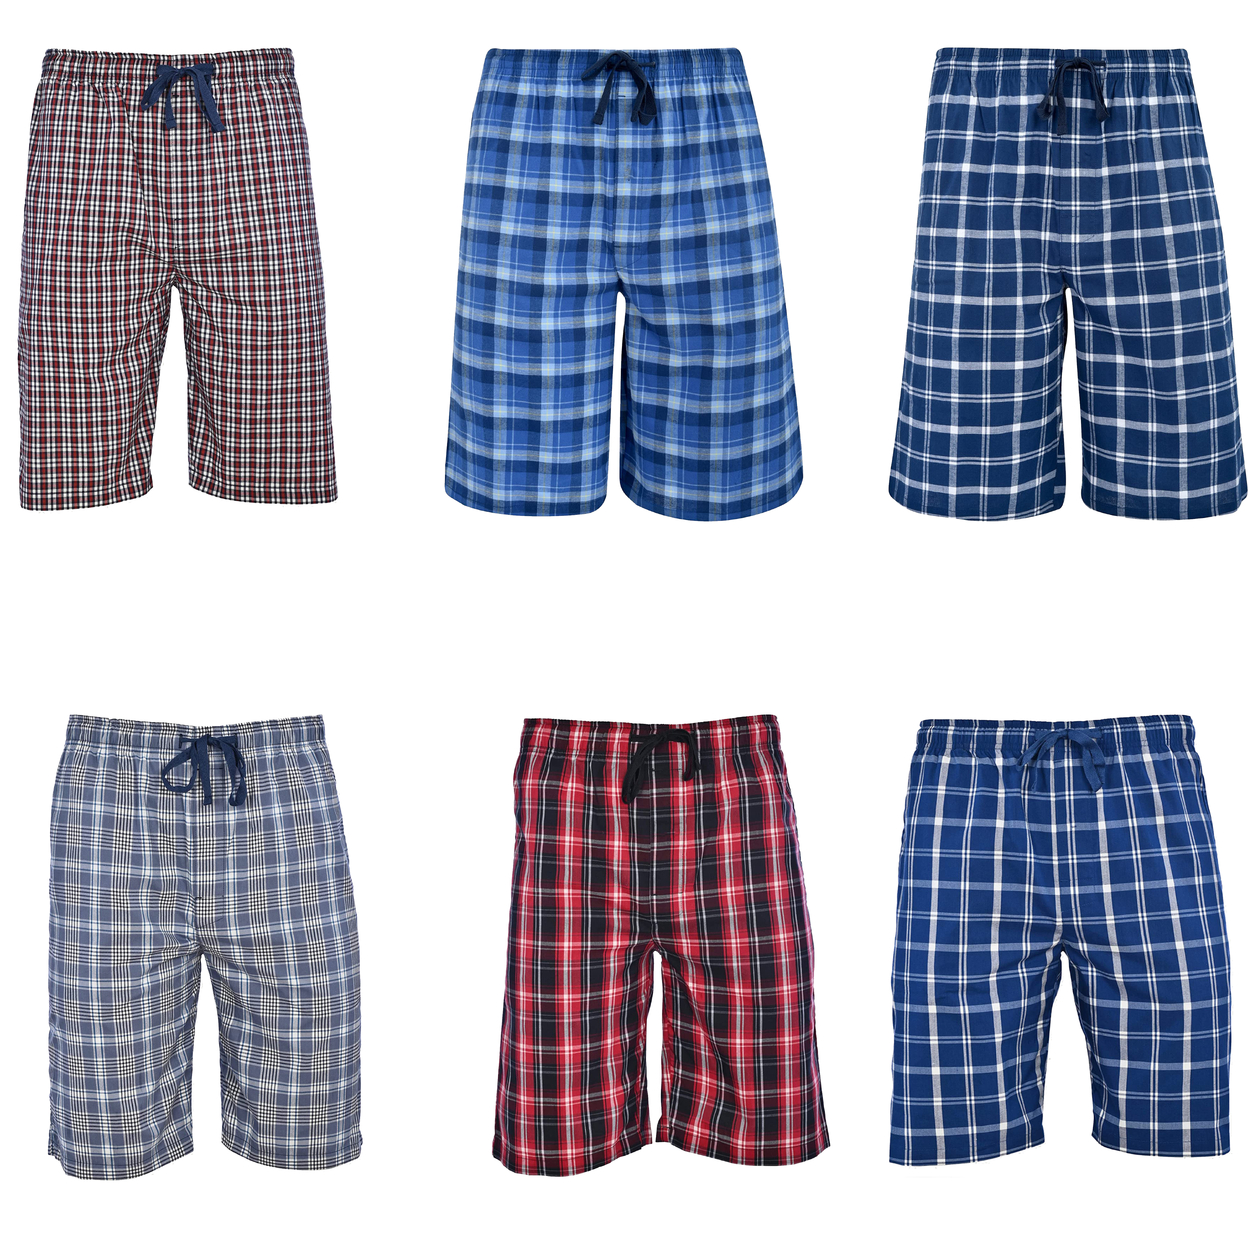 2-Pack: Men's Ultra Soft Plaid Lounge Pajama Sleep Wear Shorts - Black & Black, Large